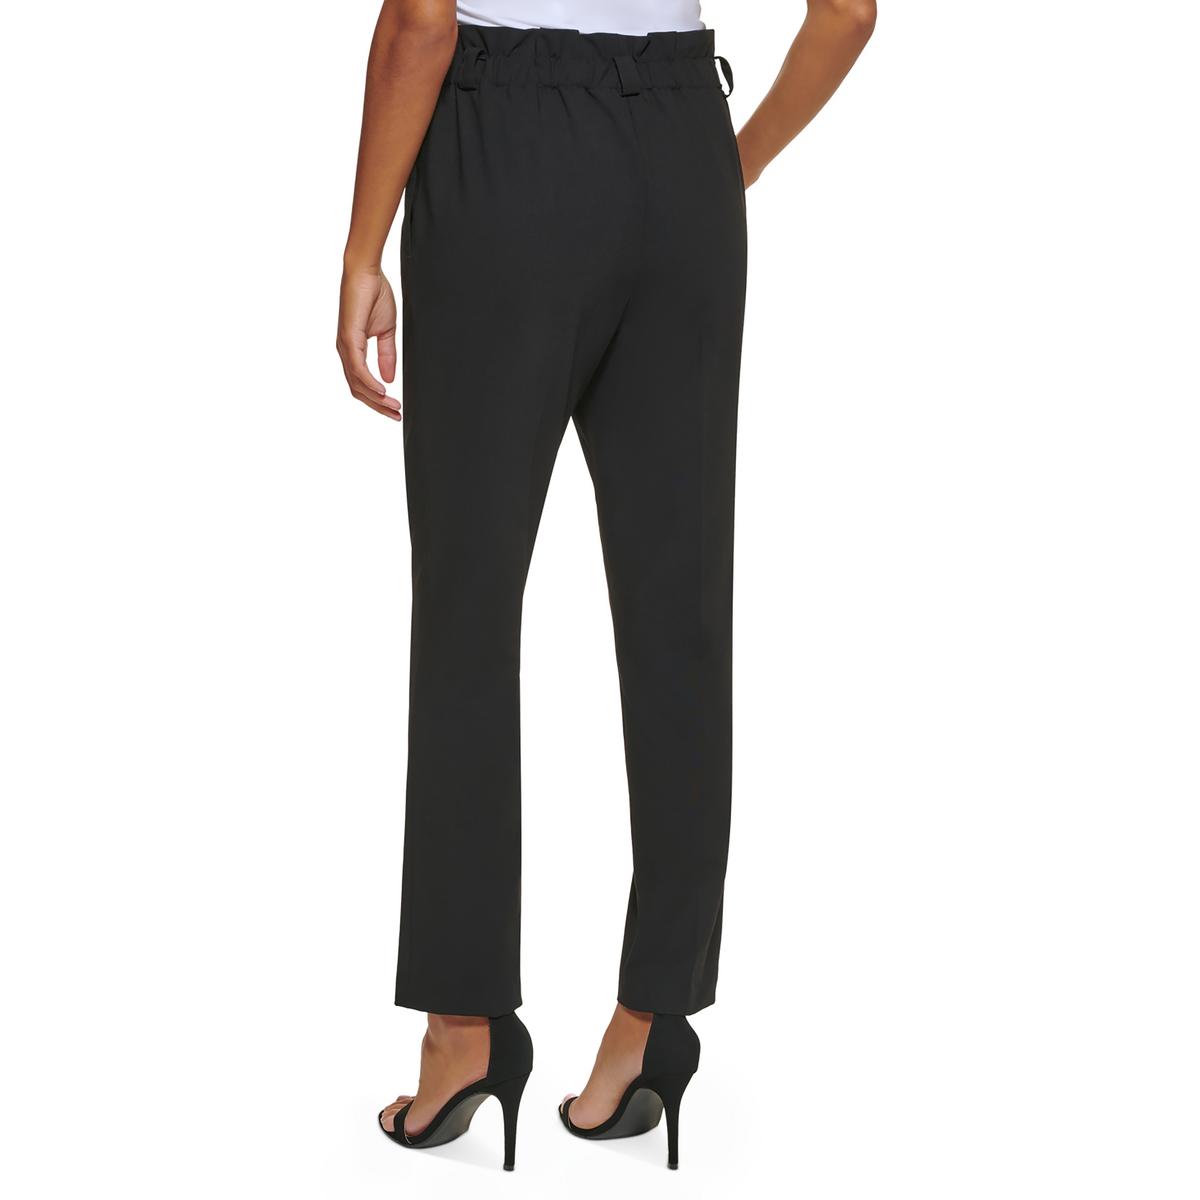 DKNY Womens Black High Rise Office Workwear High-Waist Pants 12 BHFO 0221